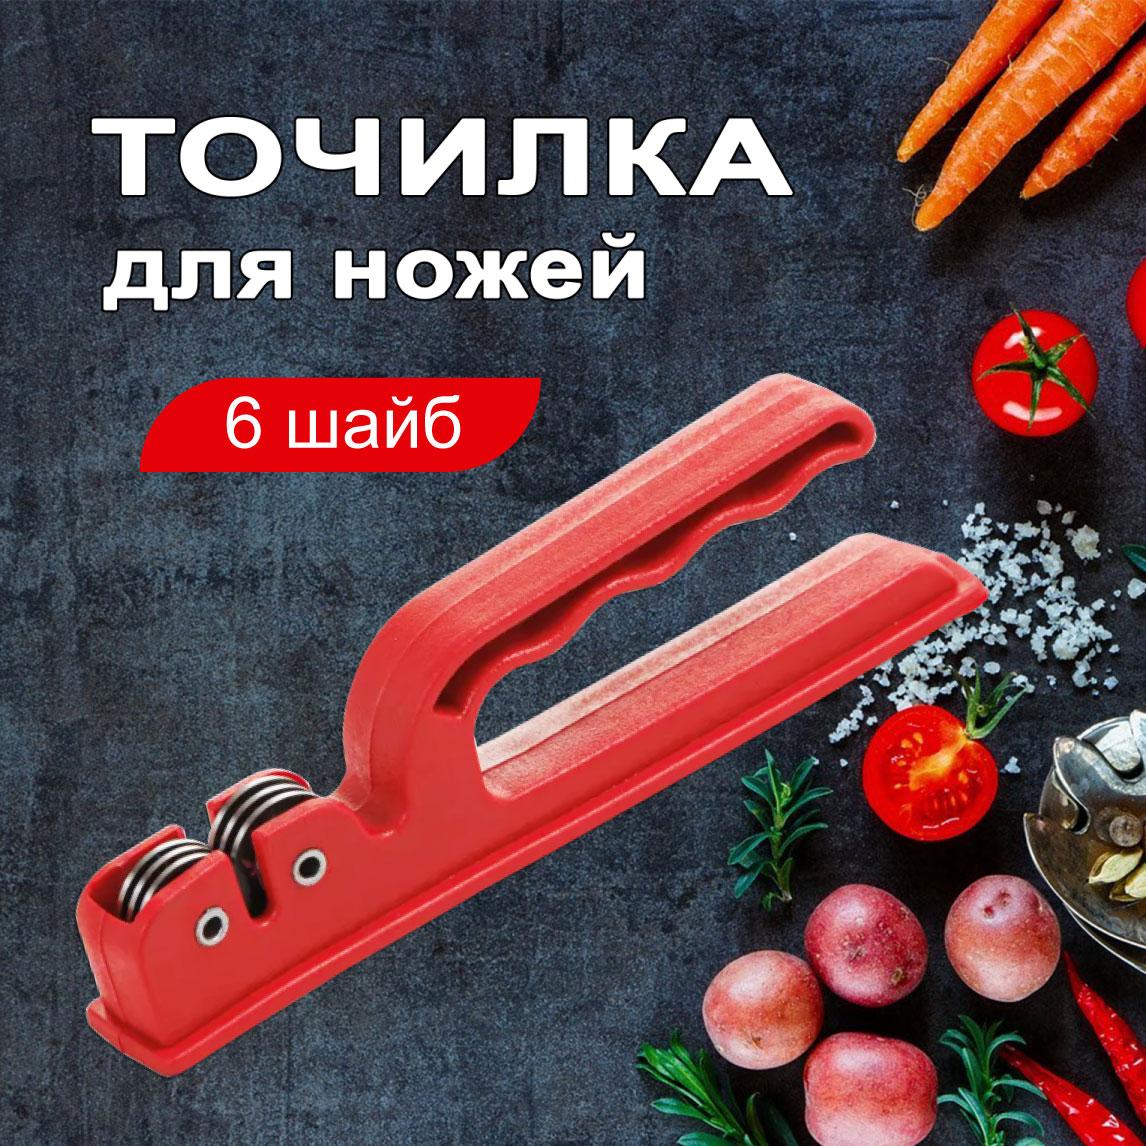 Точилка для ножей (ножеточка), Ш519-000